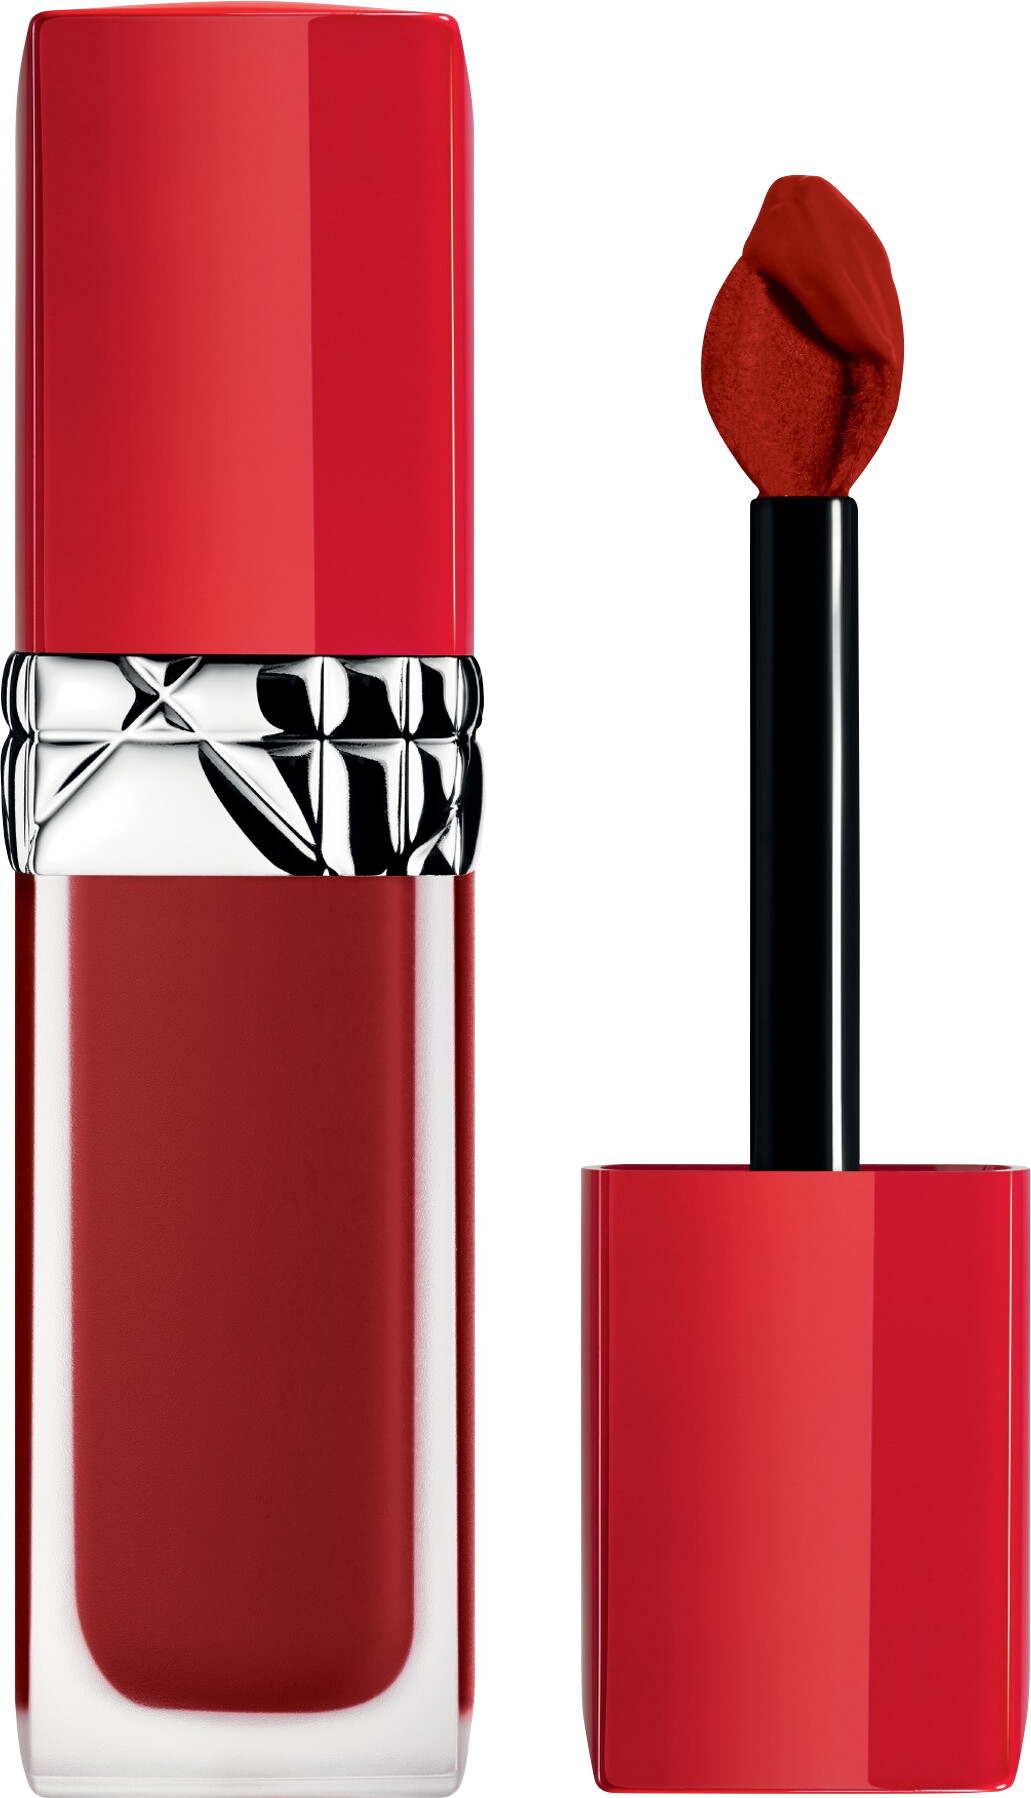 DIOR Rouge Dior Ultra Care Liquid Lipstick 6ml 866 - Romantic